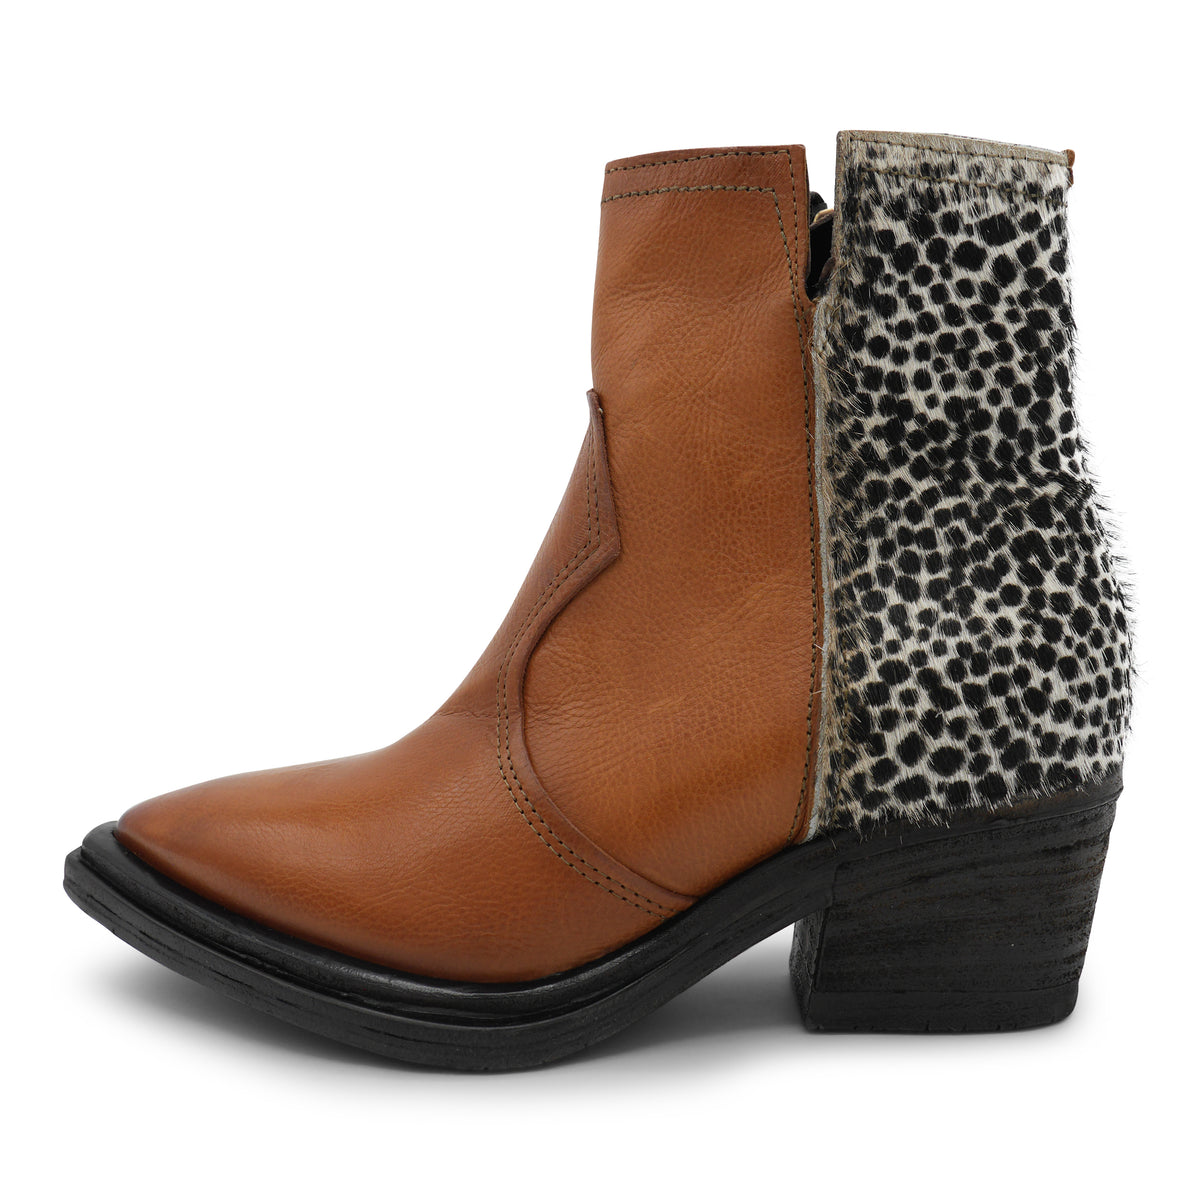 A55211 -Brandy Cheetah Zipped Ankle Boot